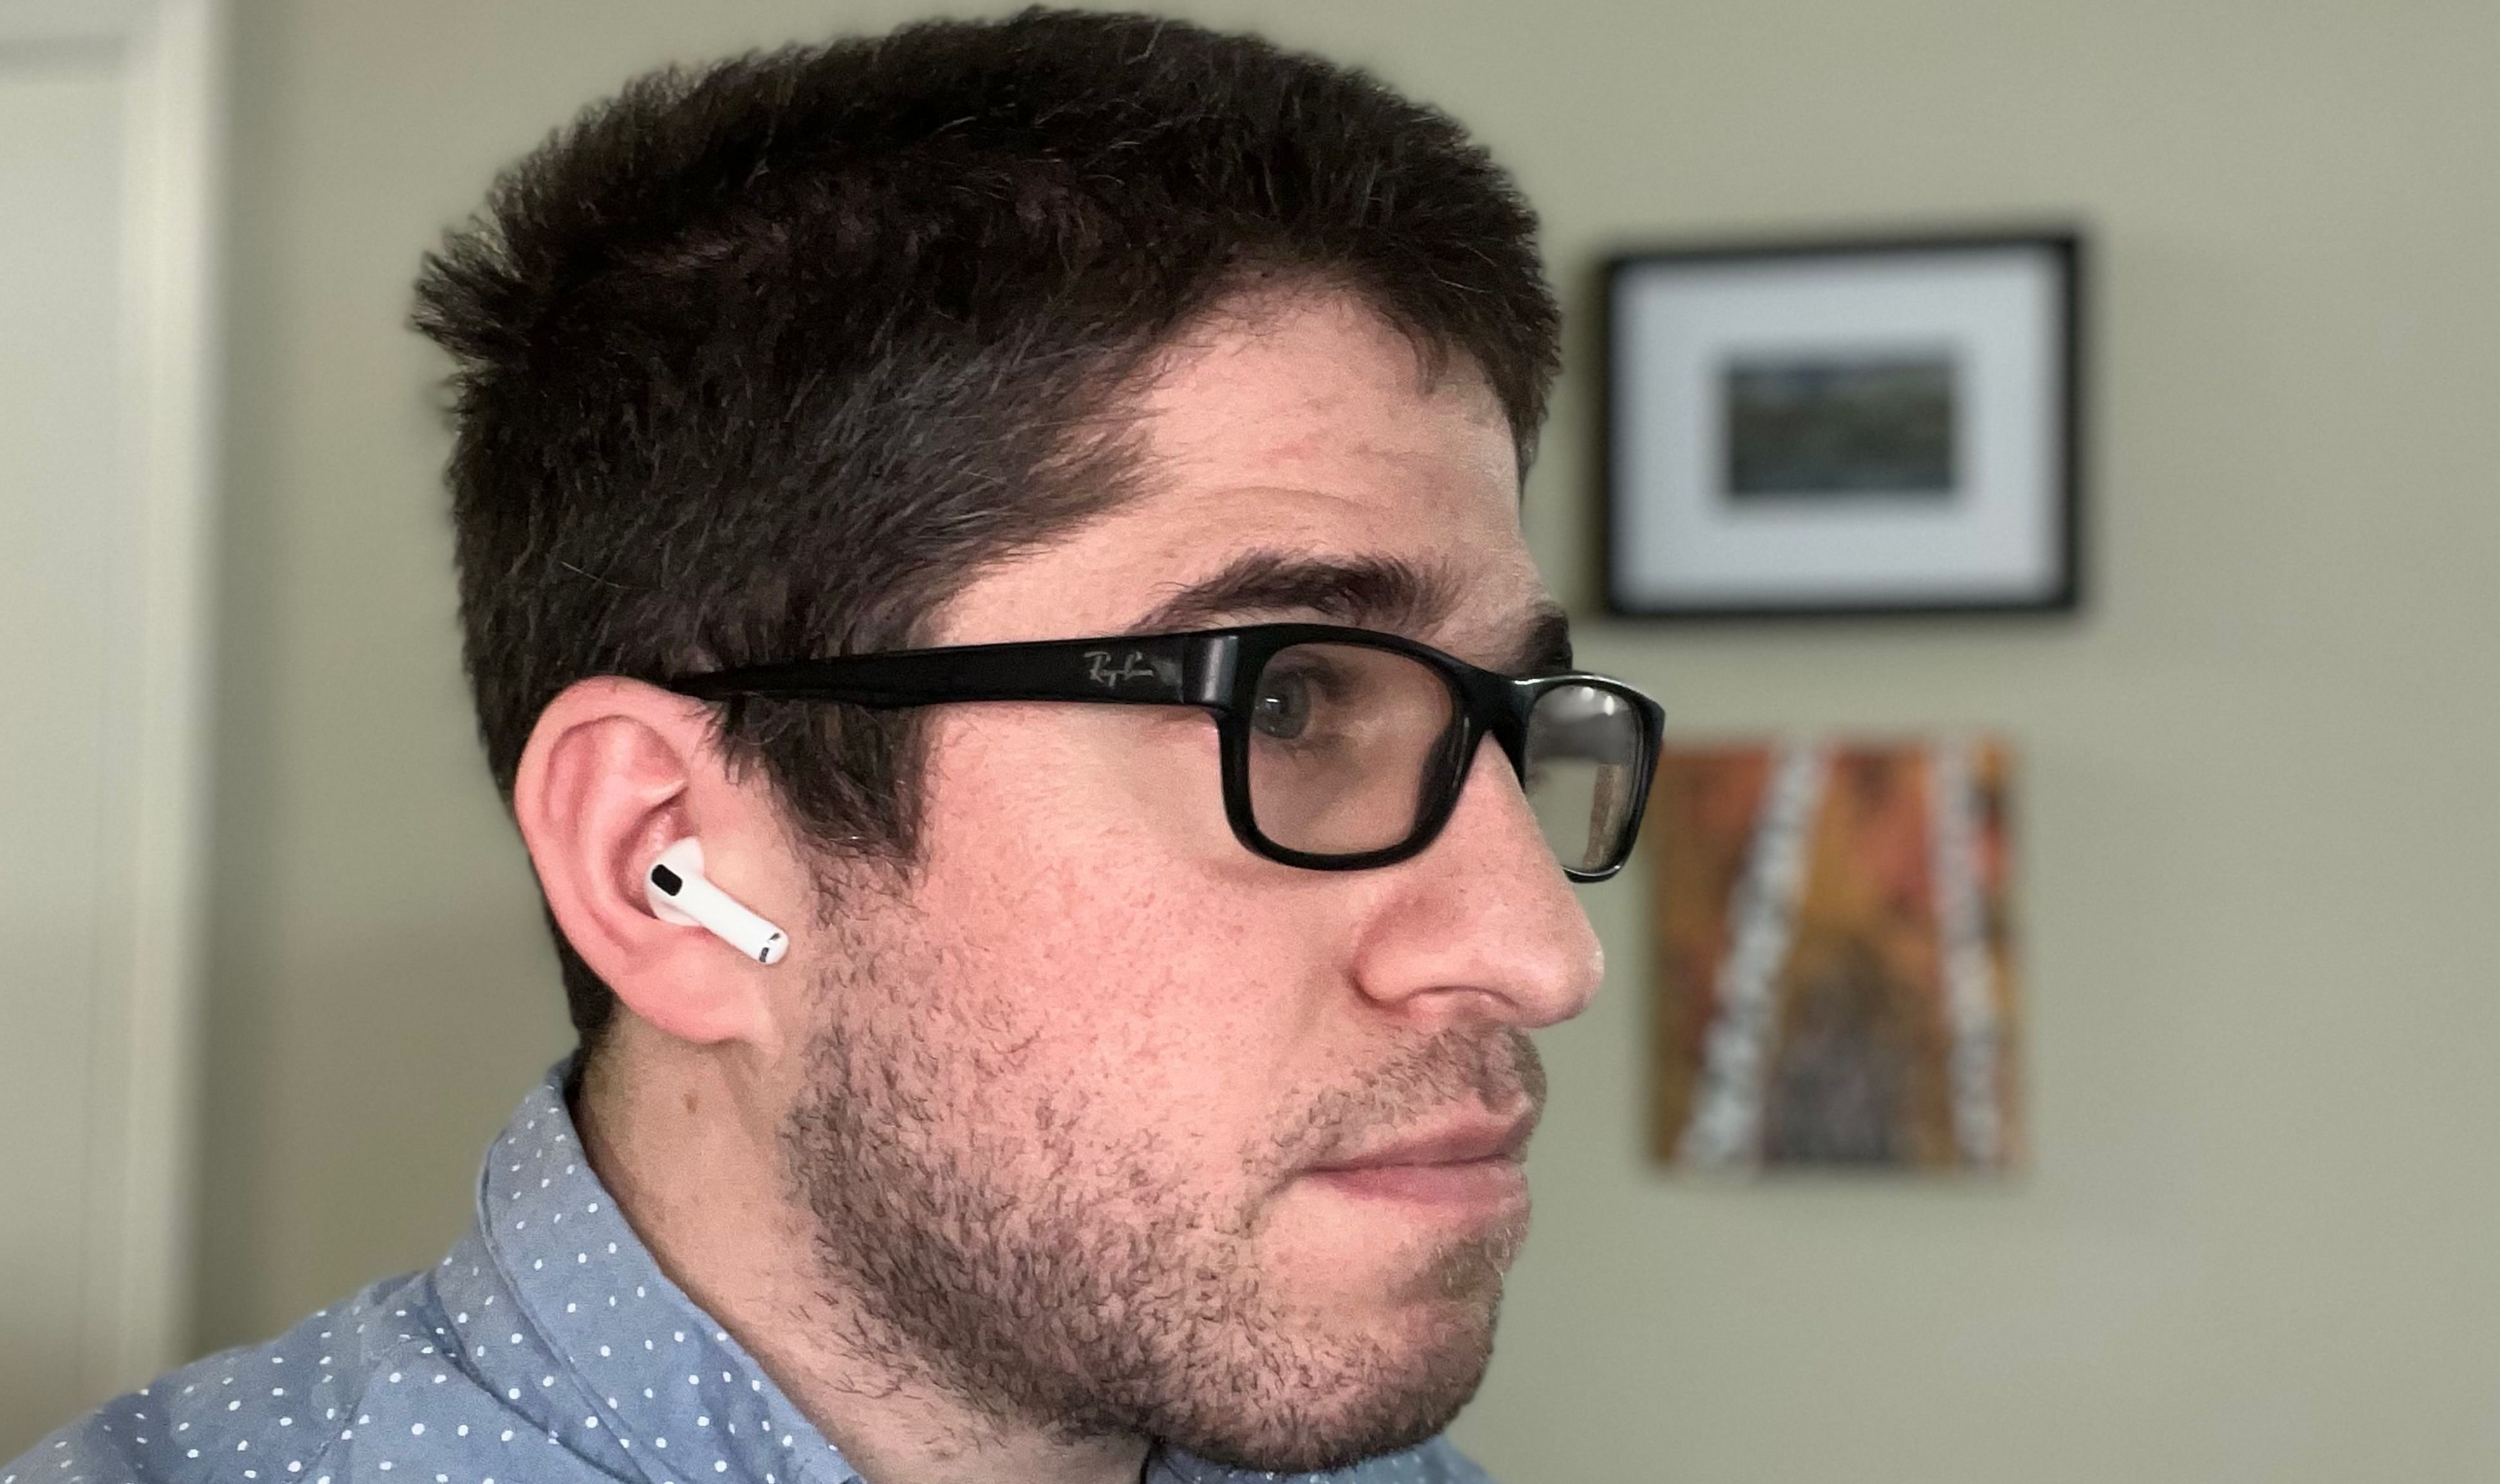 Headphone Case Apple AirPods 3 (LV) - Element